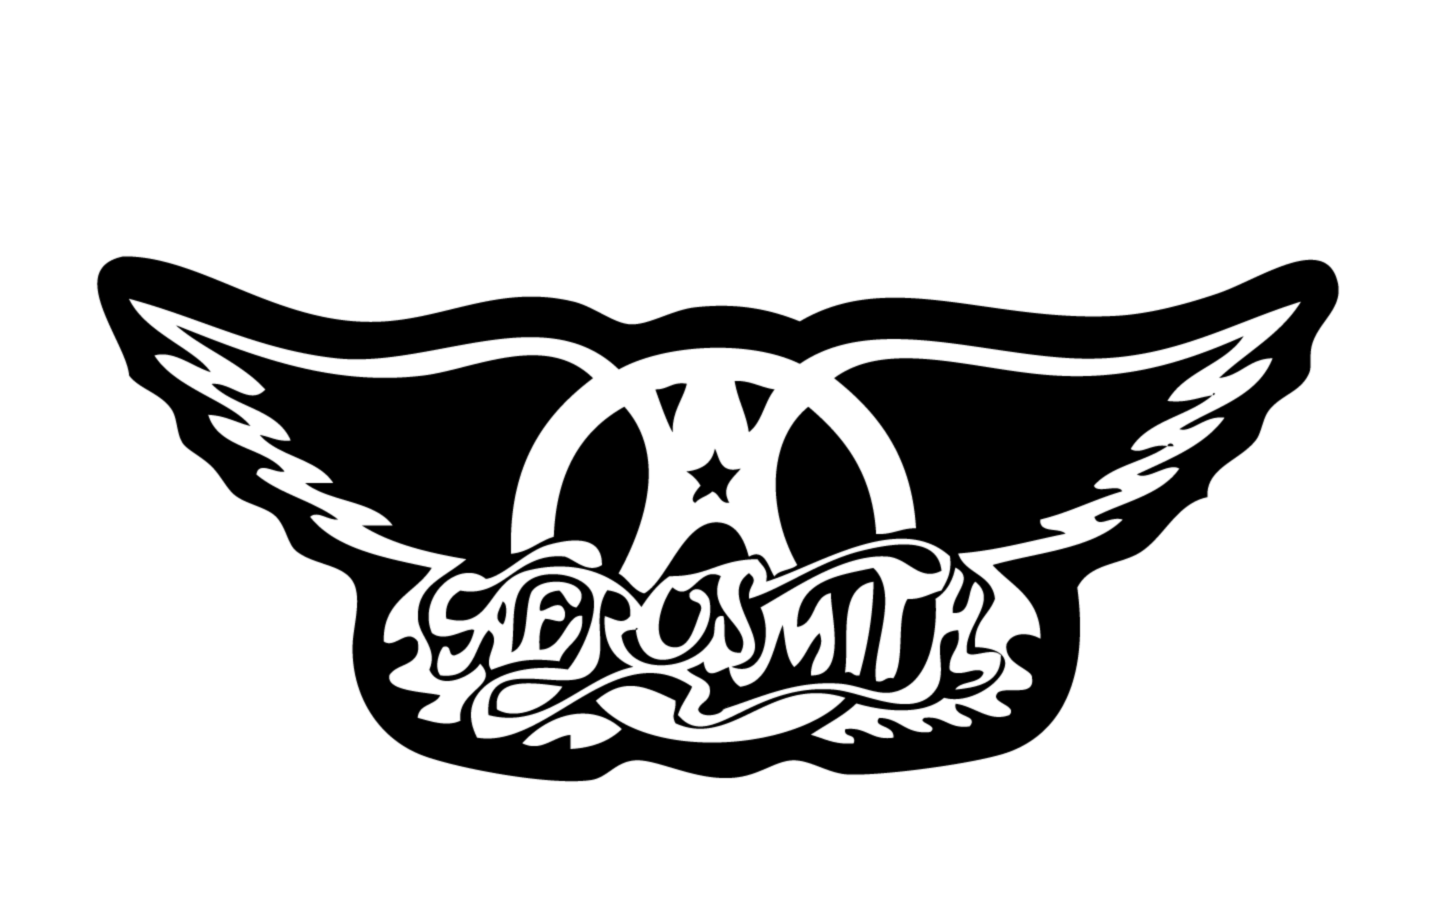 AEROSMITH - Aerosmith Rub On 